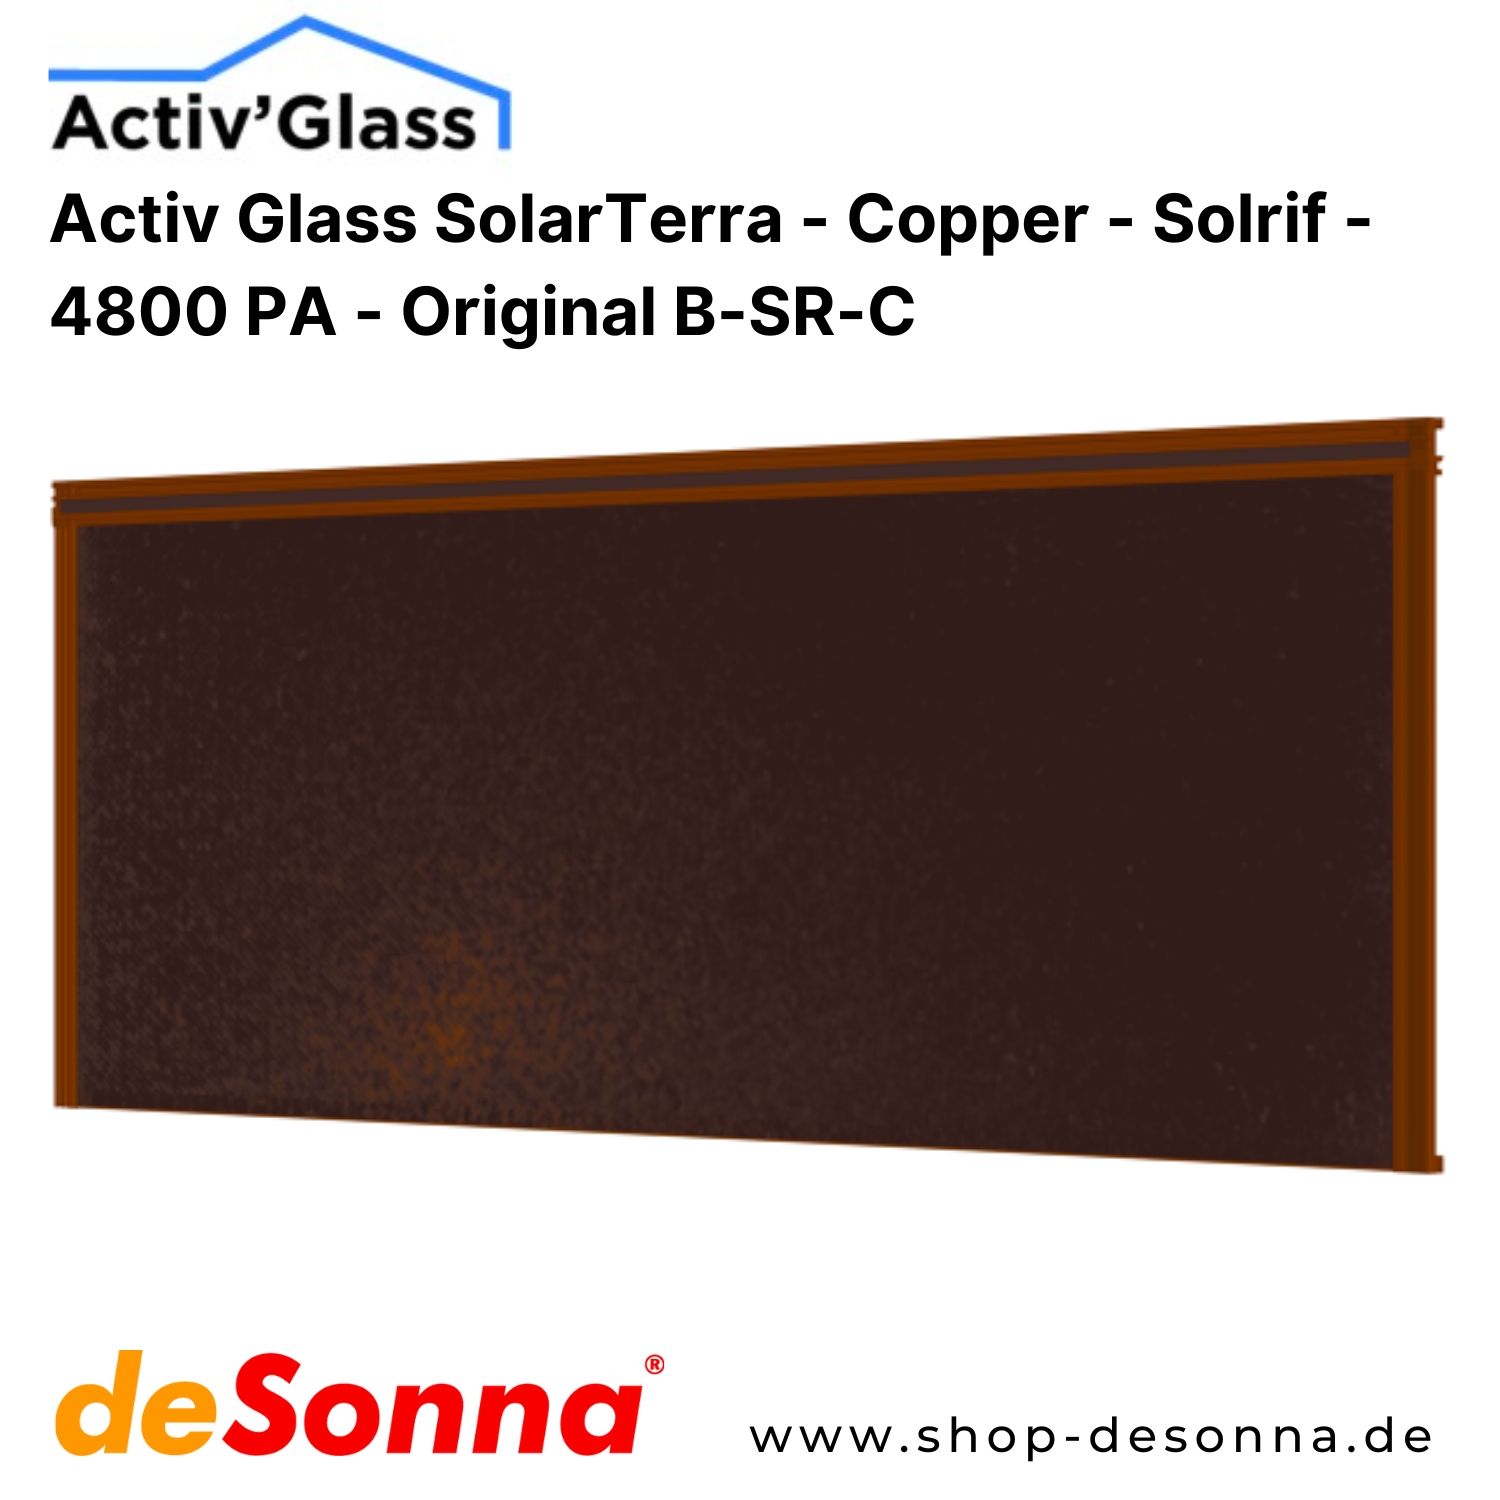 Activ Glass SolarTerra Original B-SR-C - Copper - 140 Wp - Solrif-Indach-Solarmodul